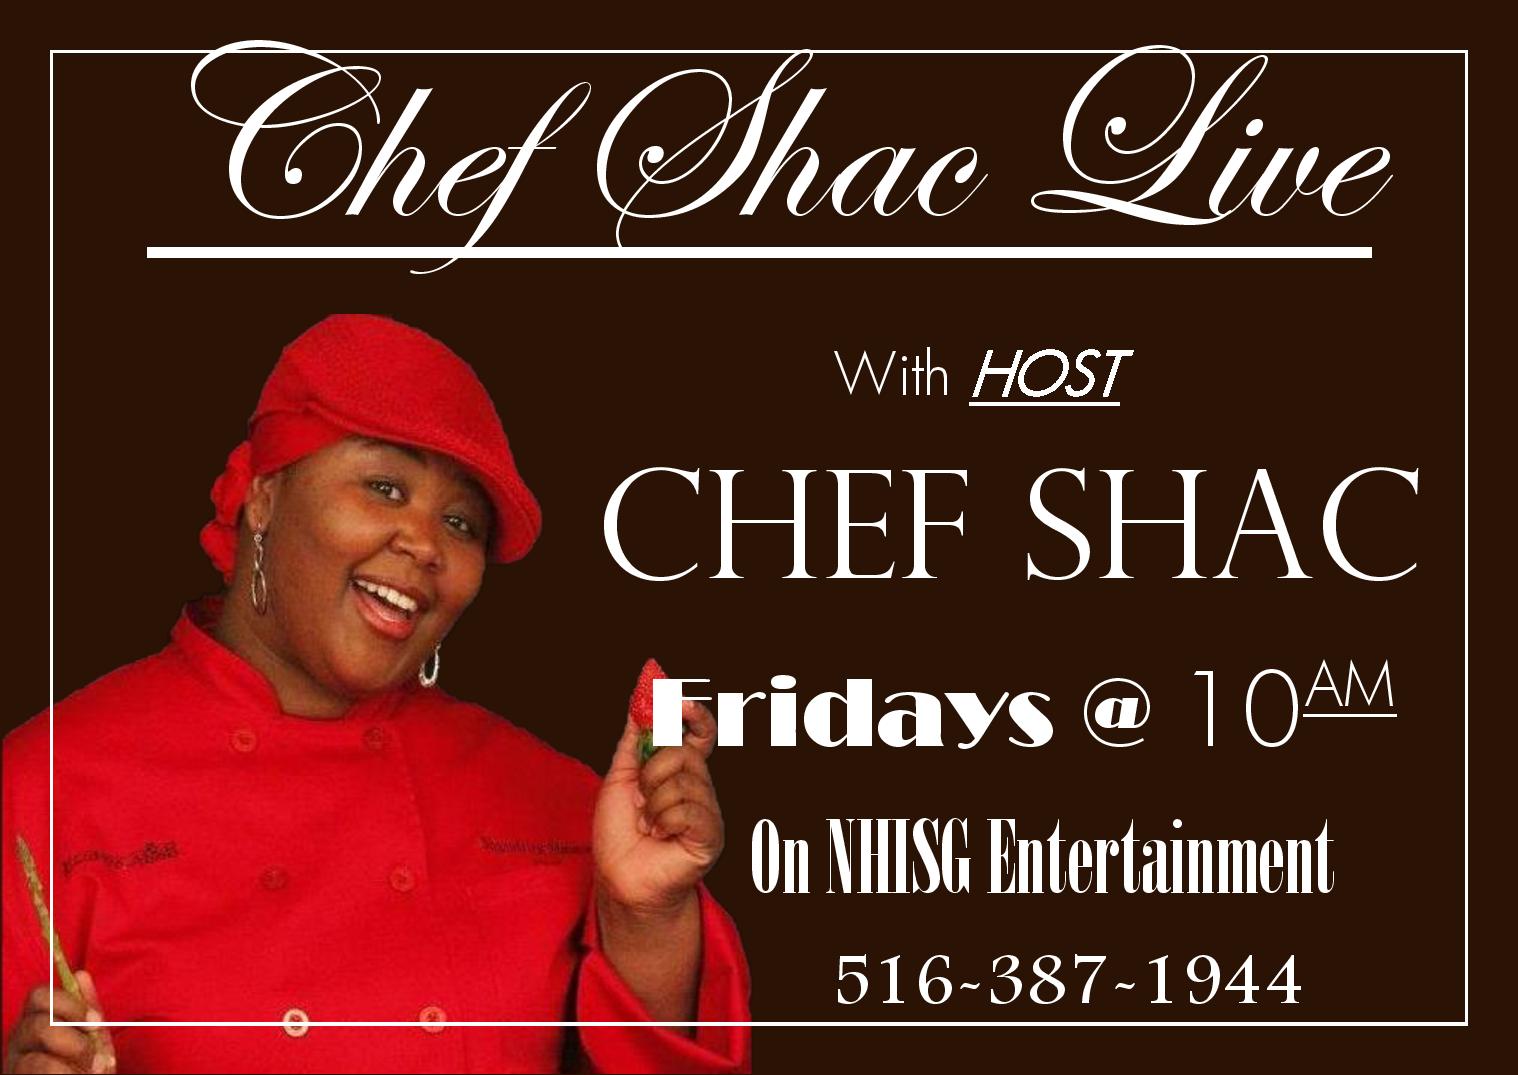 Chef Shac Live